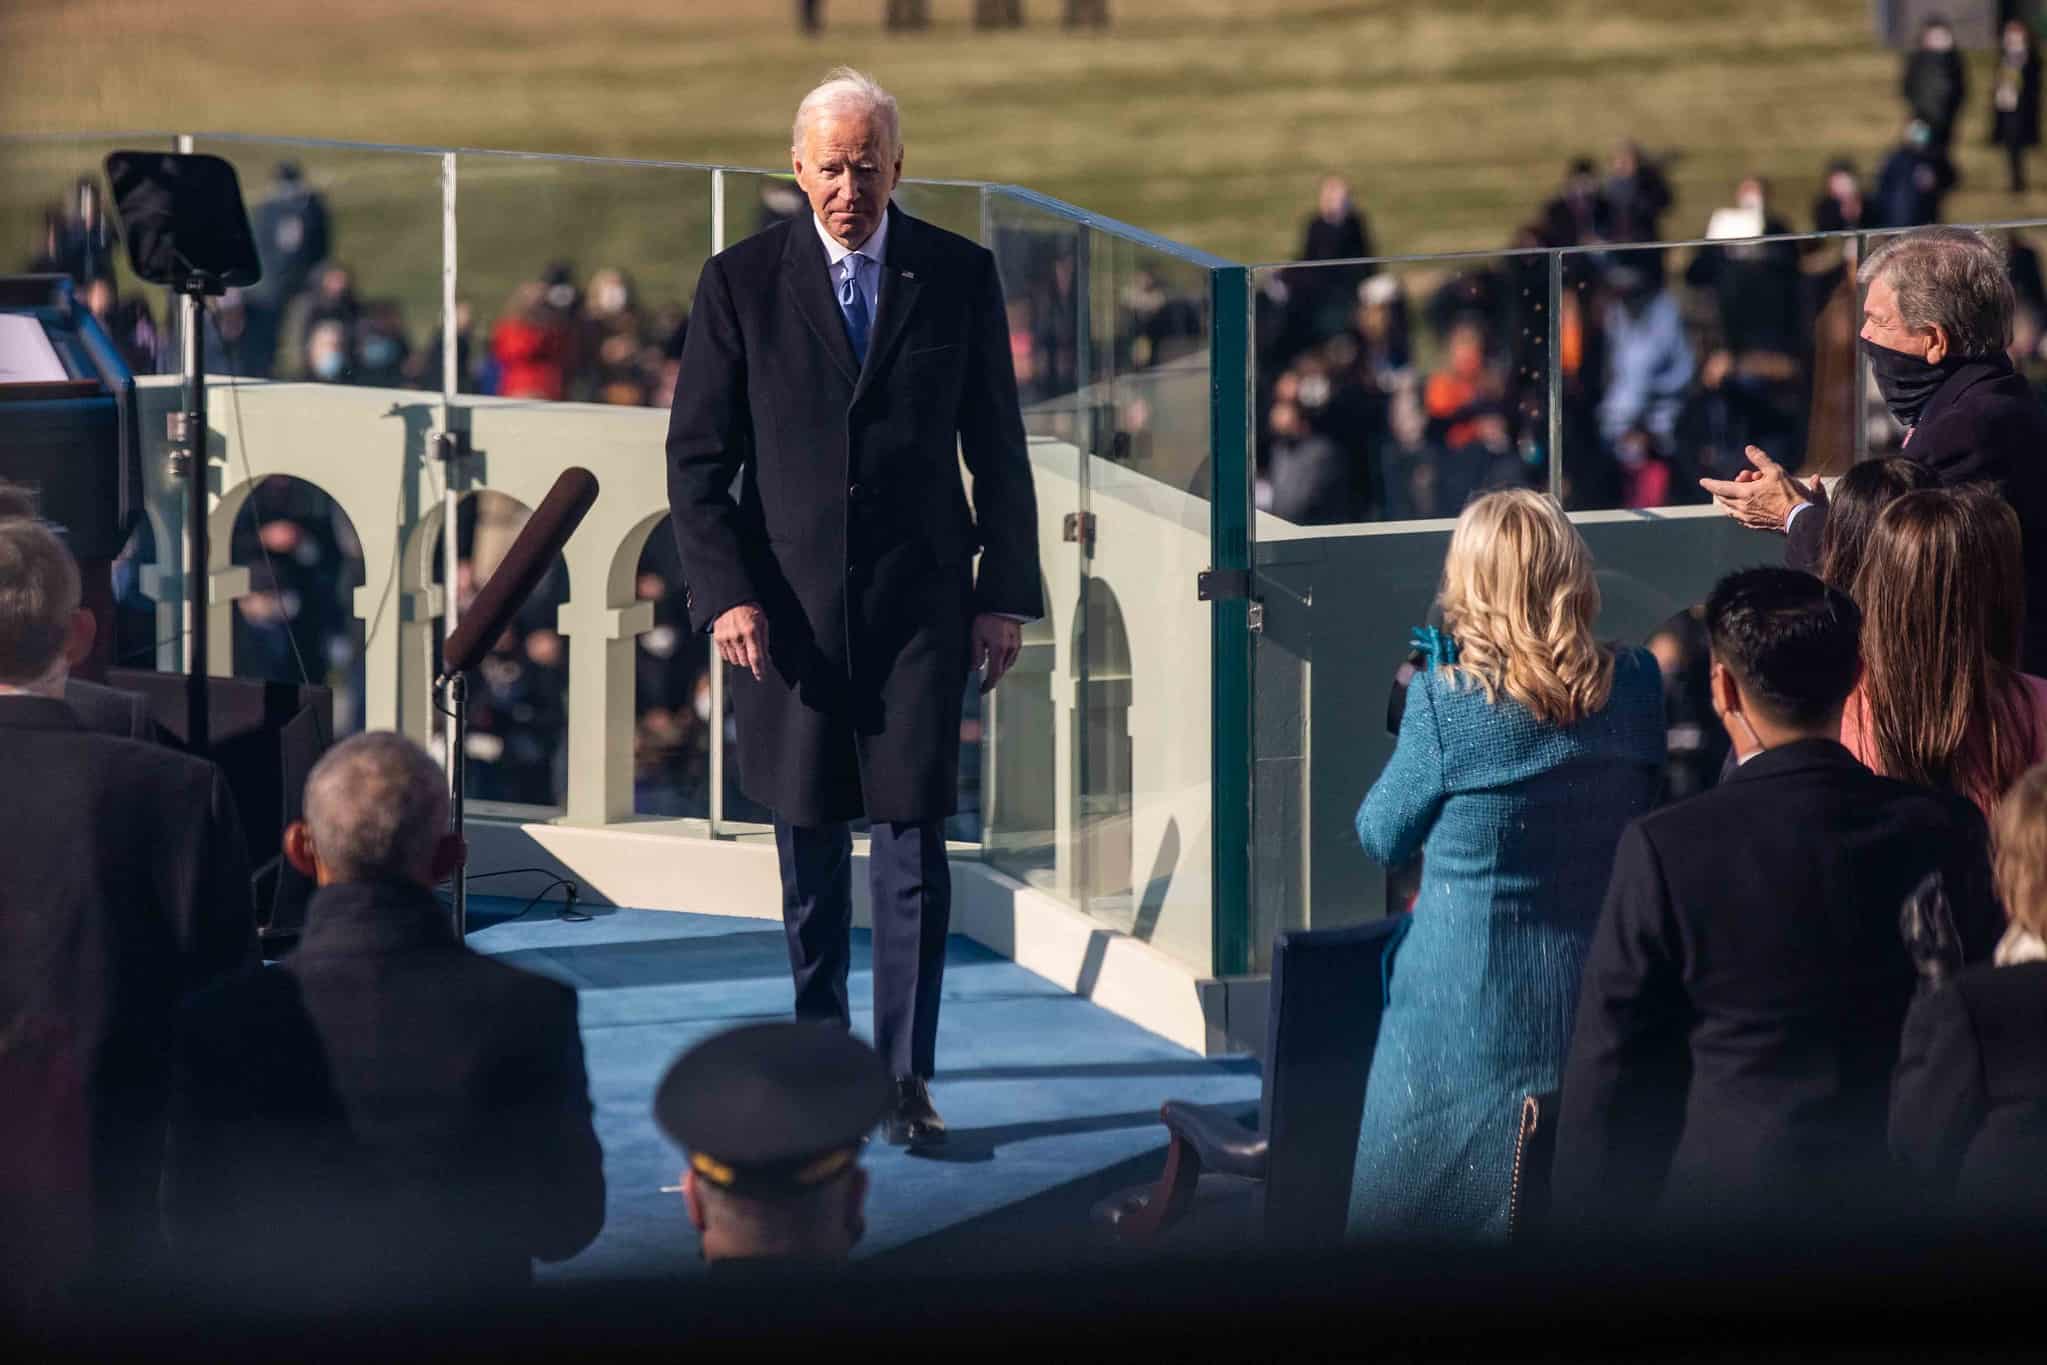 Joe Biden. DoD photo by U.S. Army Sgt. Gabriel Silva. Taken on January 20, 2021 at the 59th Inaugural Ceremonies.